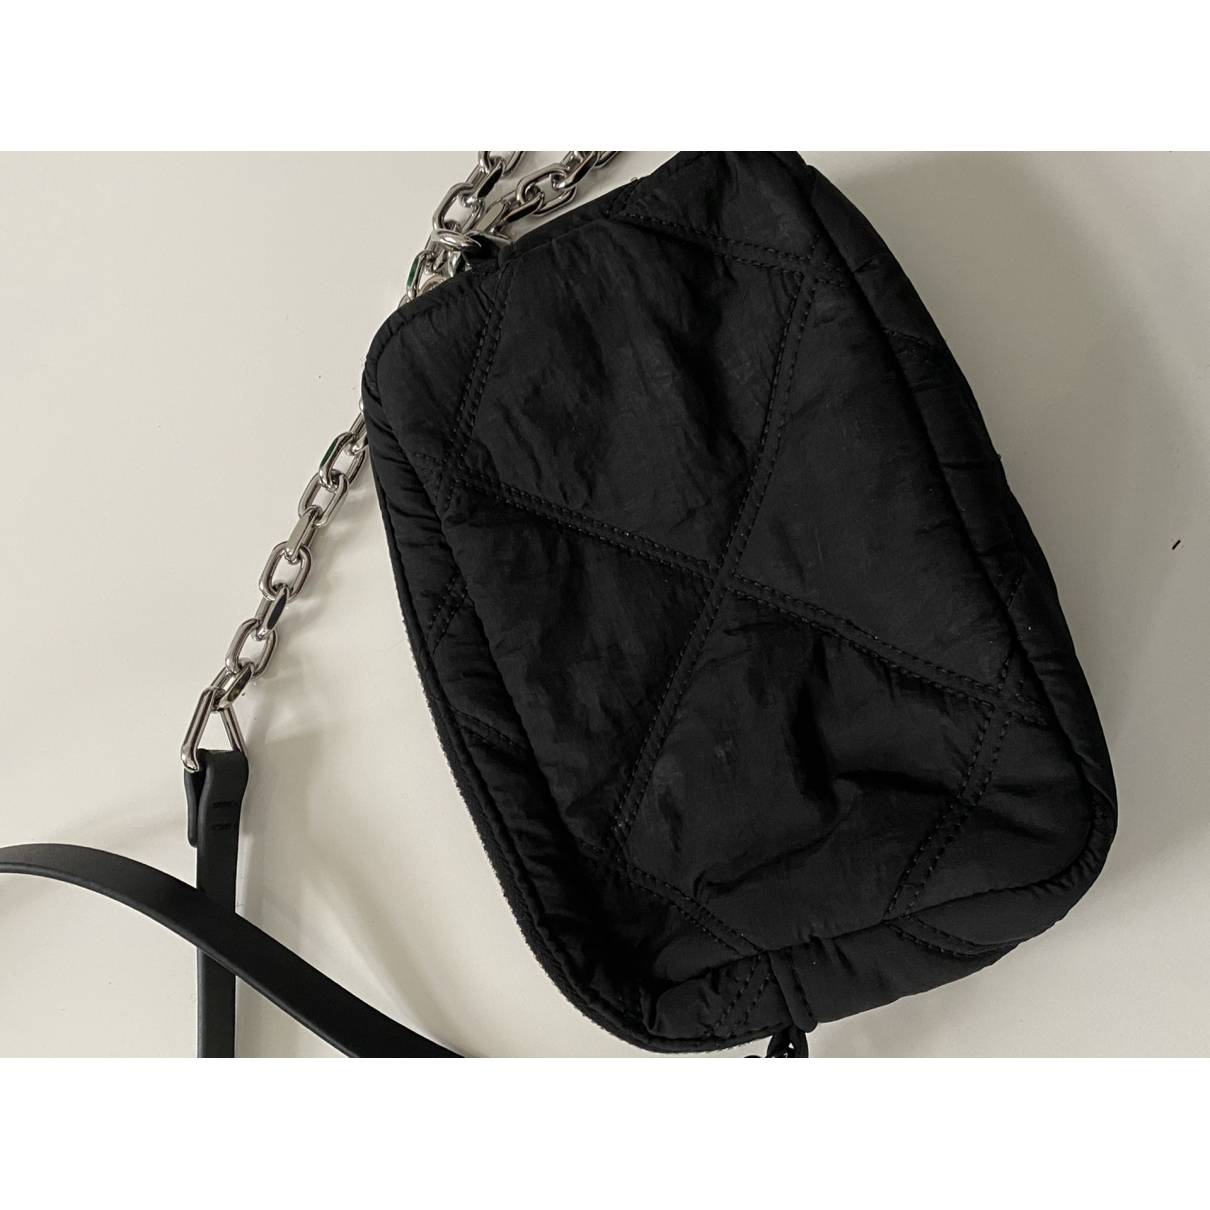 Buy Bimba y Lola Bags & Handbags online - 204 products